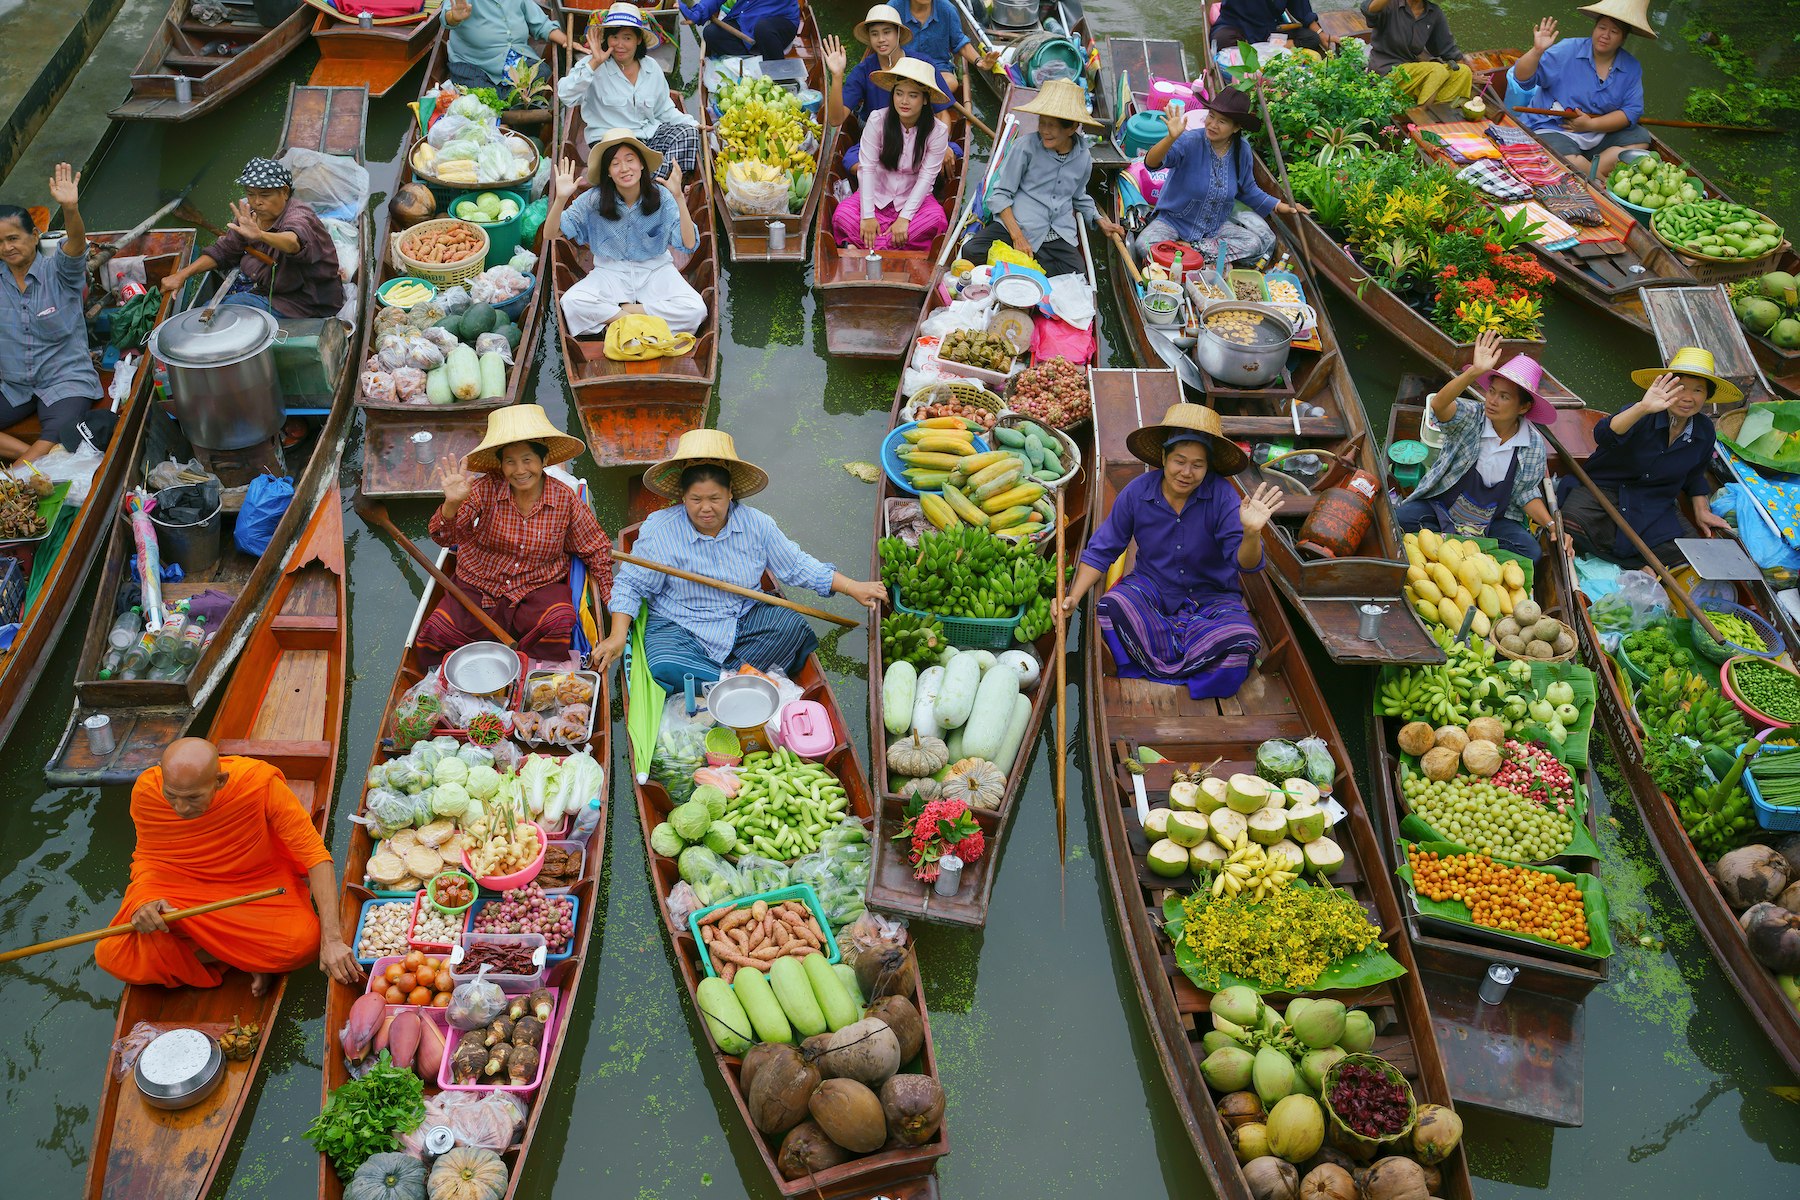 Vendors in boats at the Tha Kha floating market, Amphawa, Samut Songkhram, Thaland